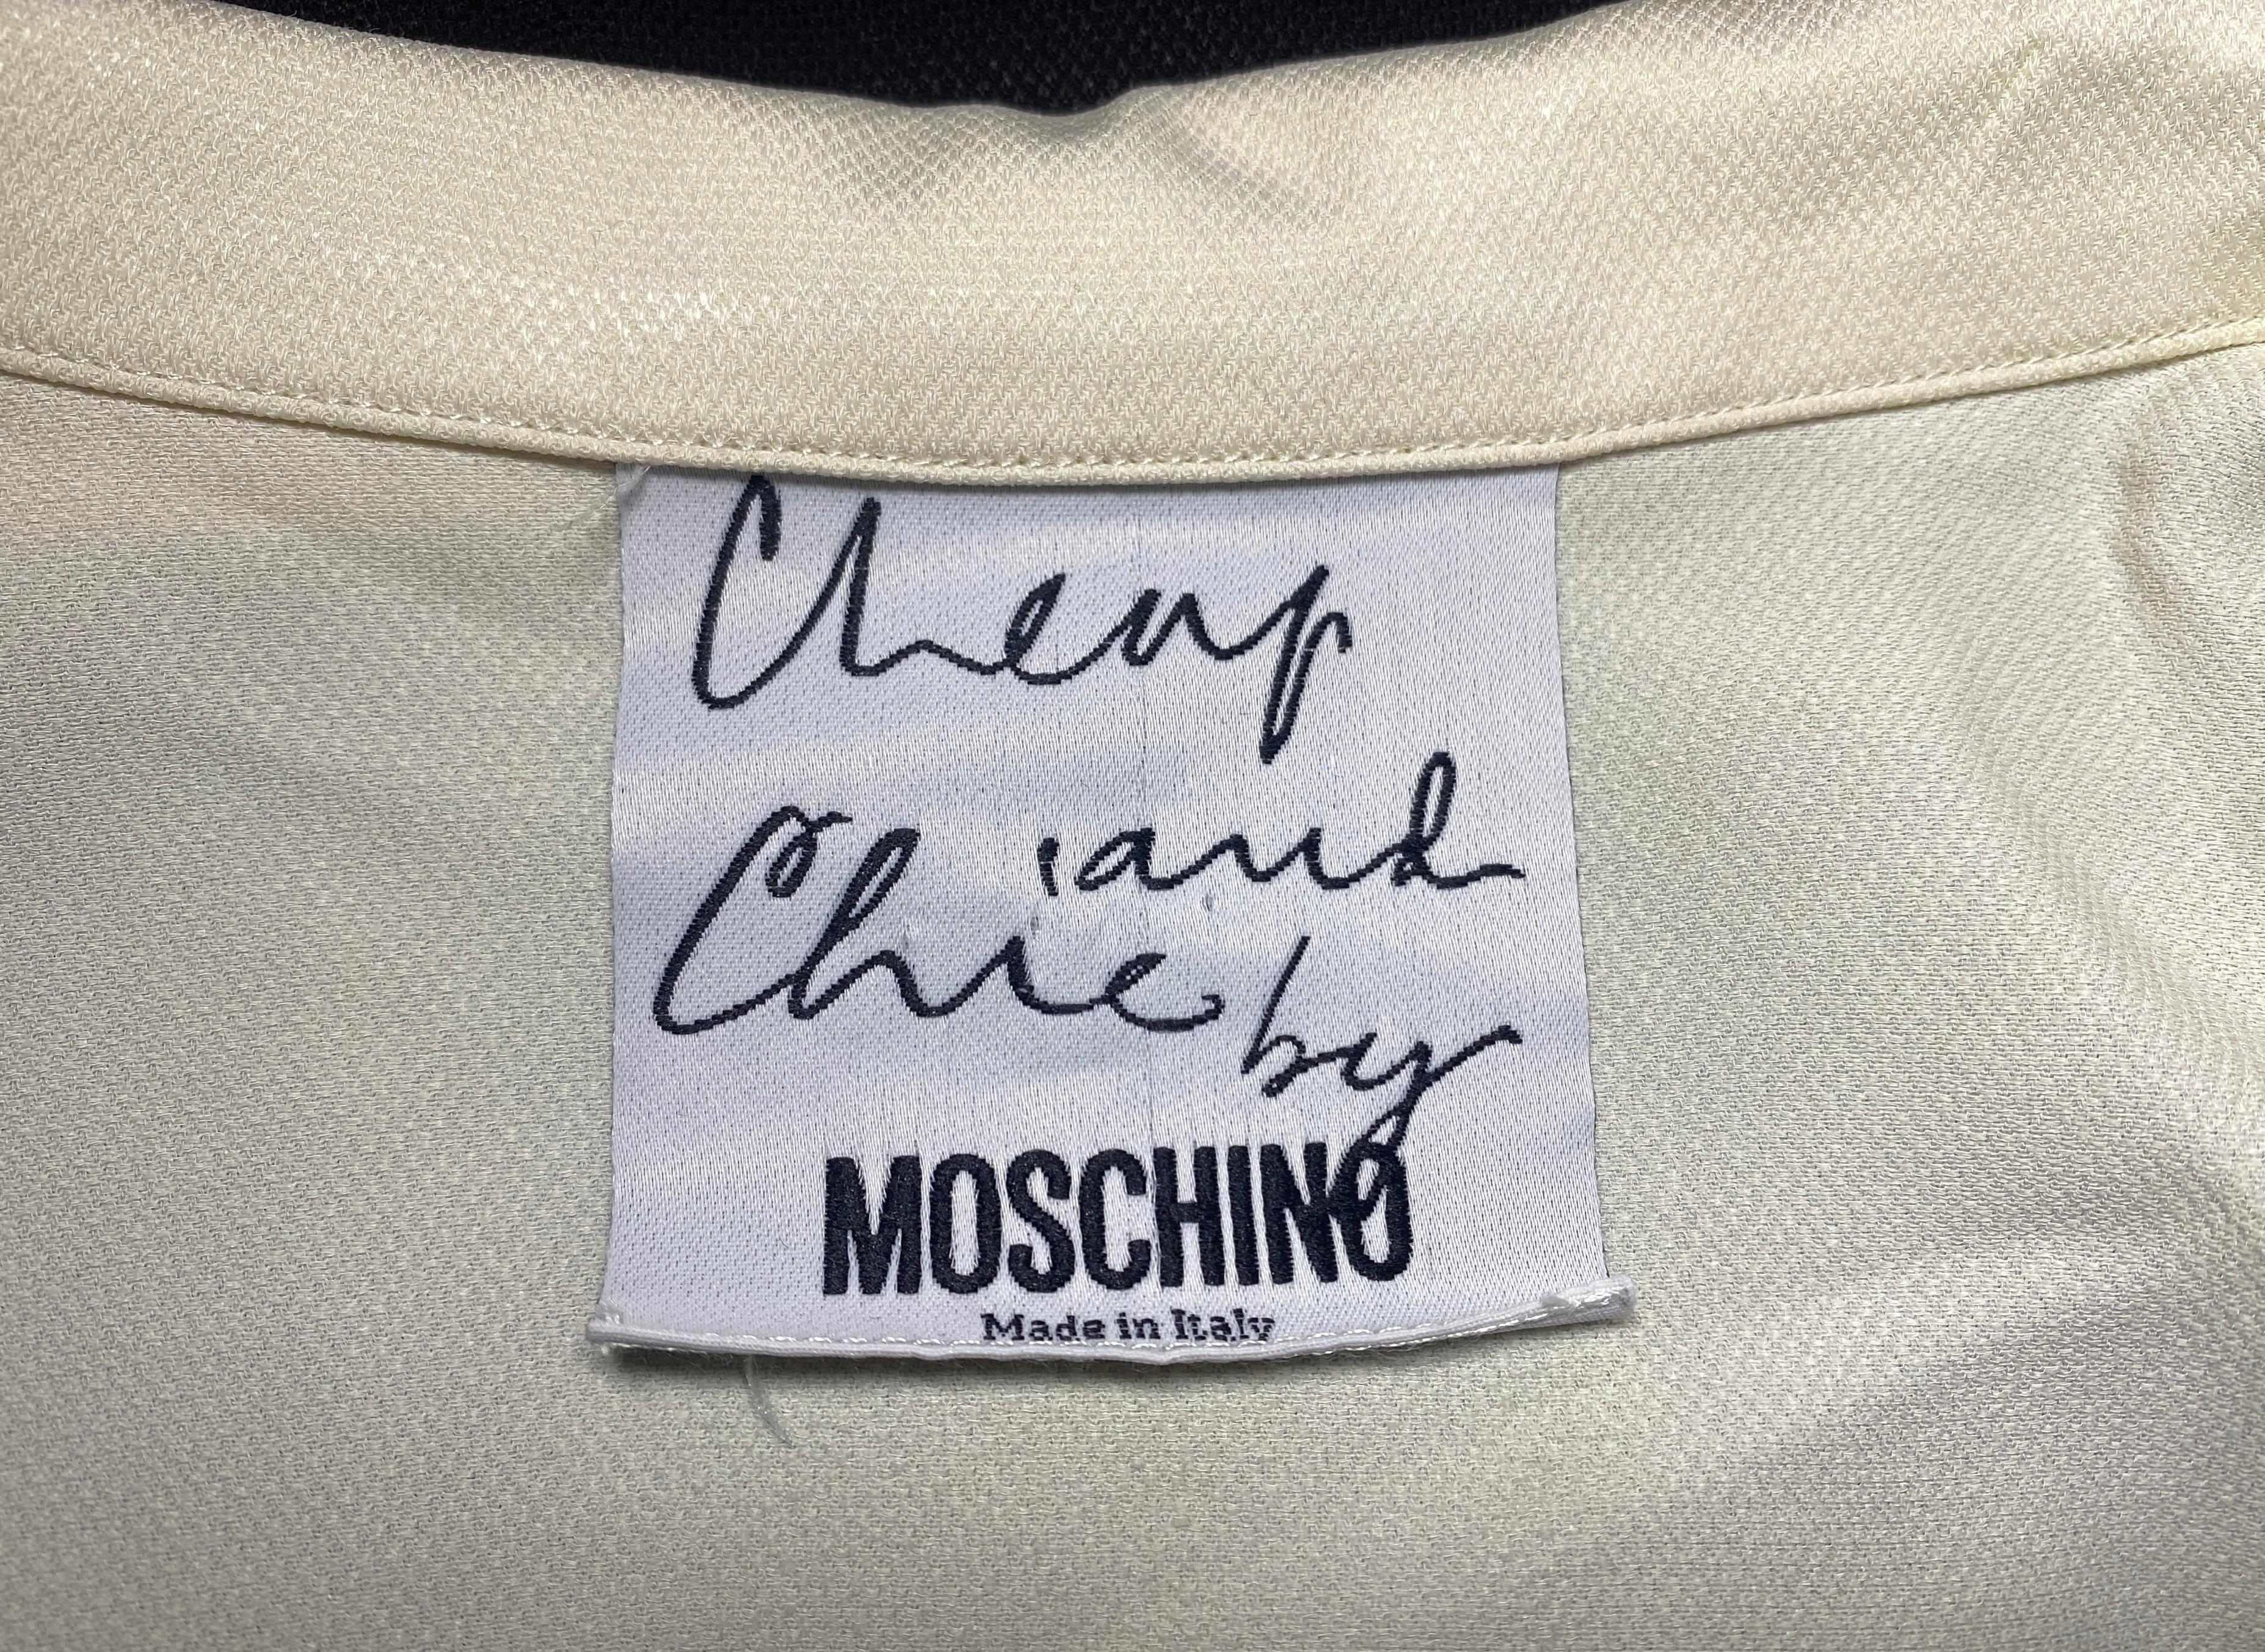 1990s Moschino Monochrome Sleeveless Shirt Dress For Sale 1